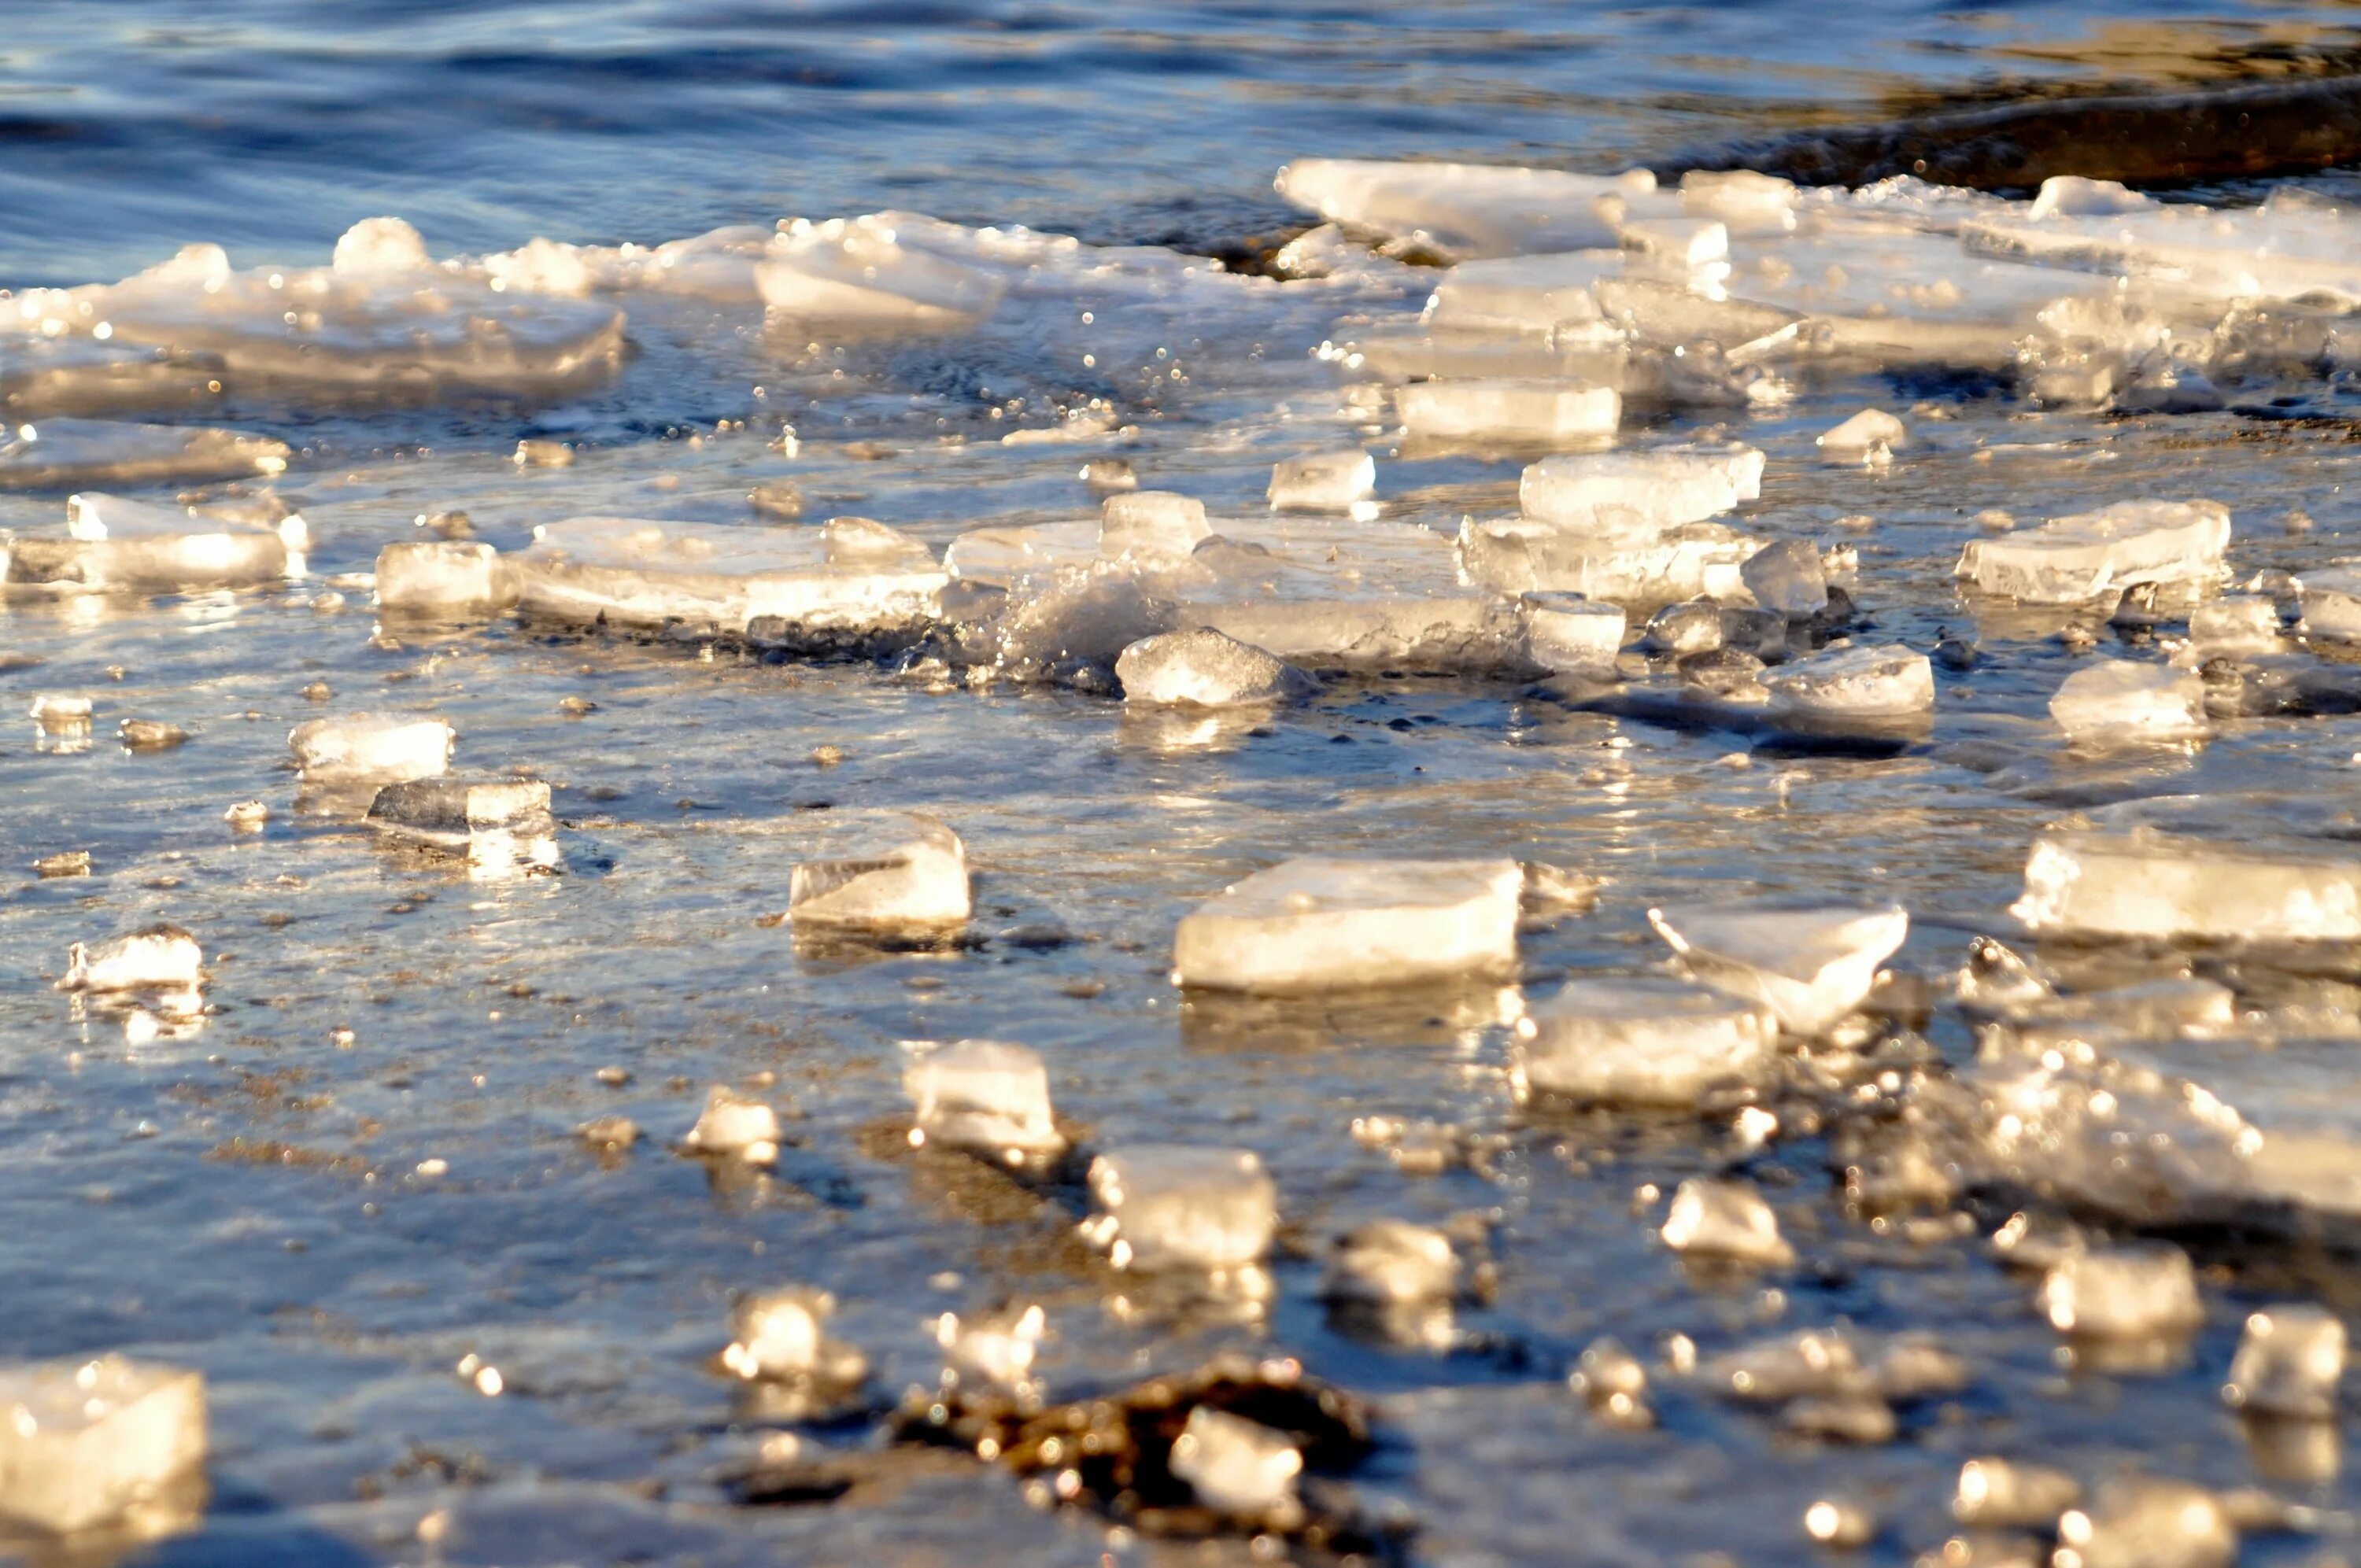 Вода со льдом. Лед. Лед на поверхности воды. Замерзшая вода.